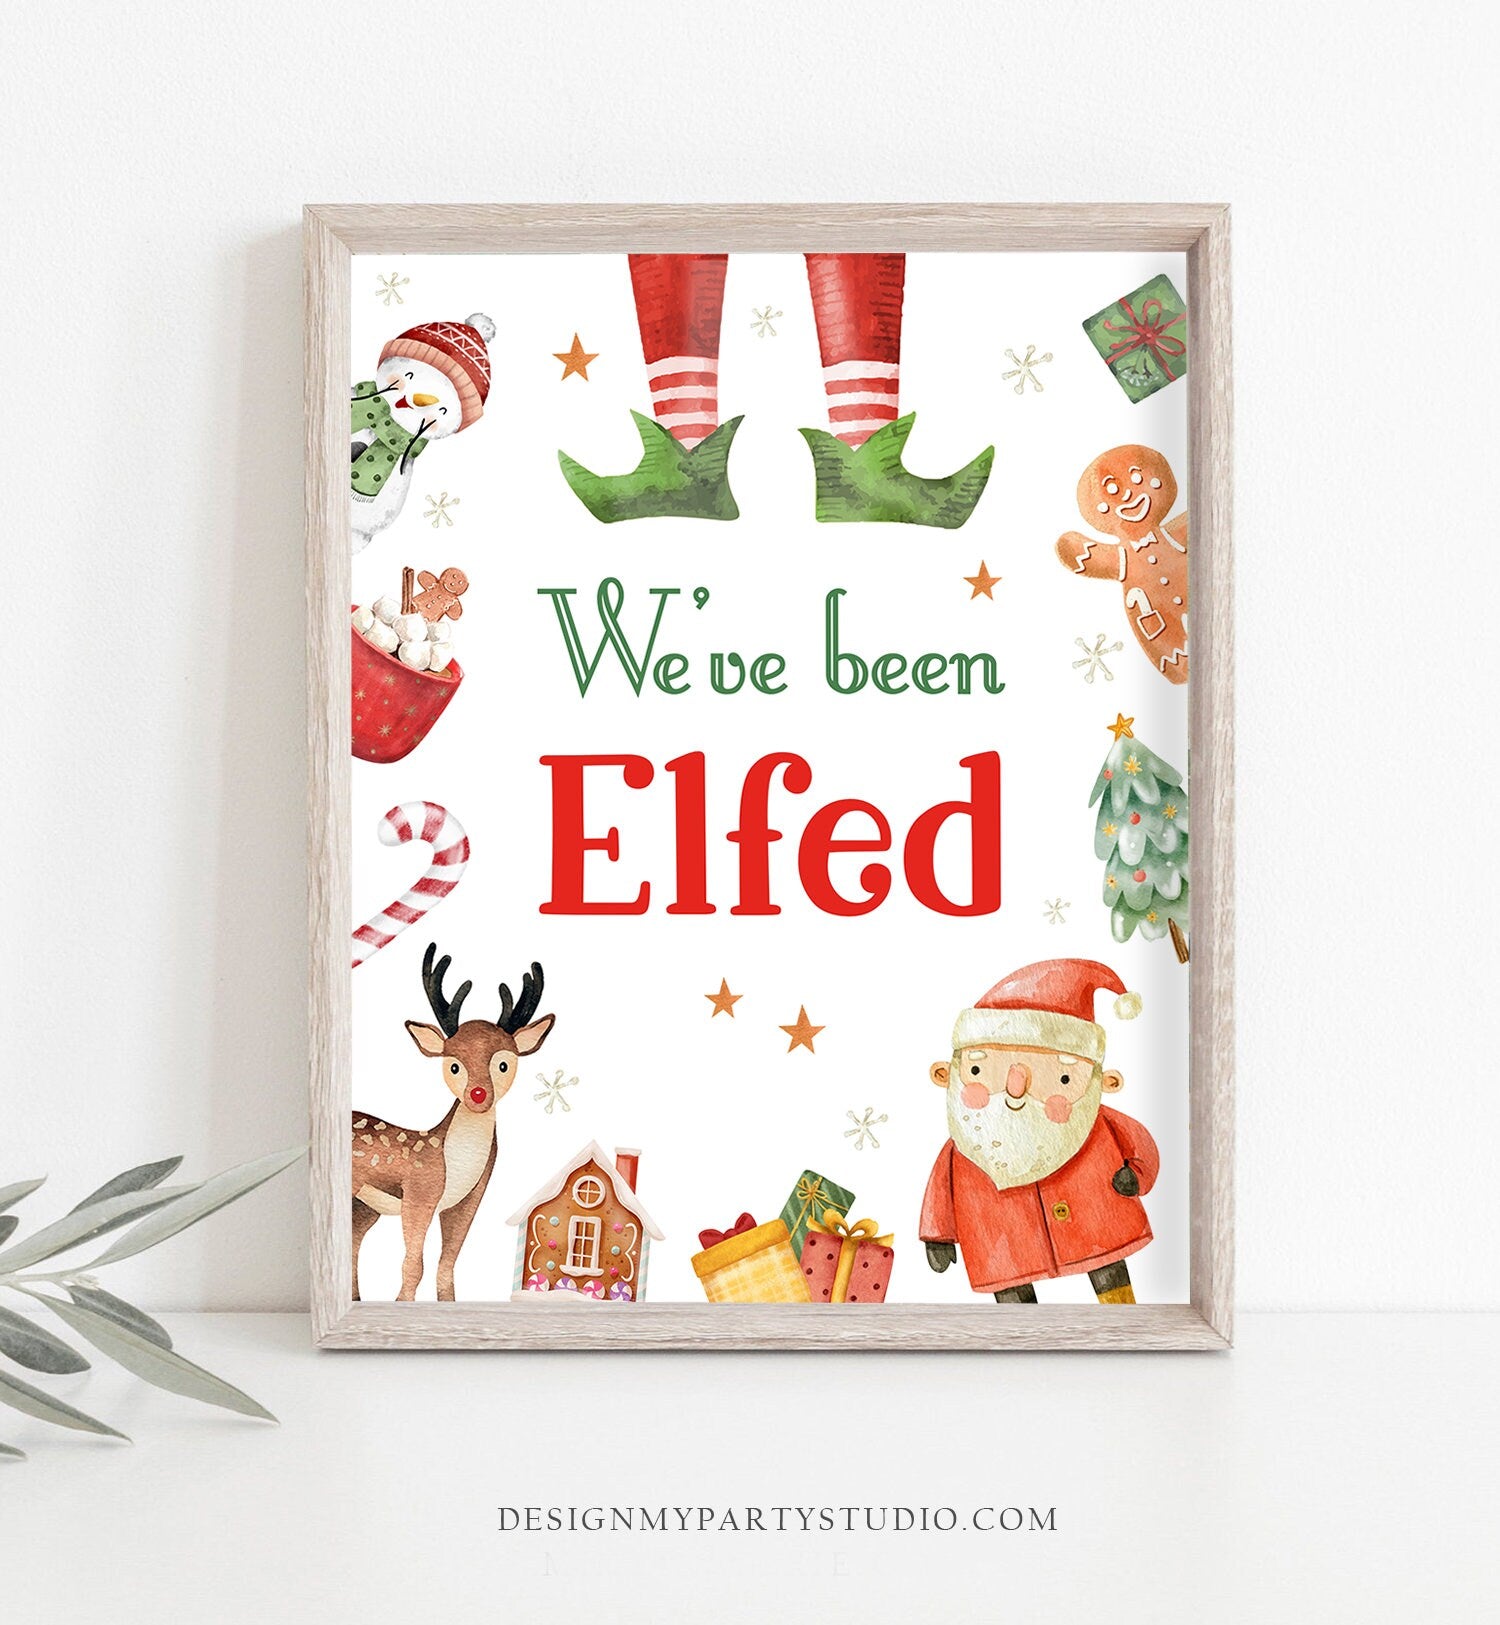 Editable You've Been Elfed Christmas Game We've Been Elfed Christmas Elf Elfed Sign Instructions Treat Holiday Printable Template 0445